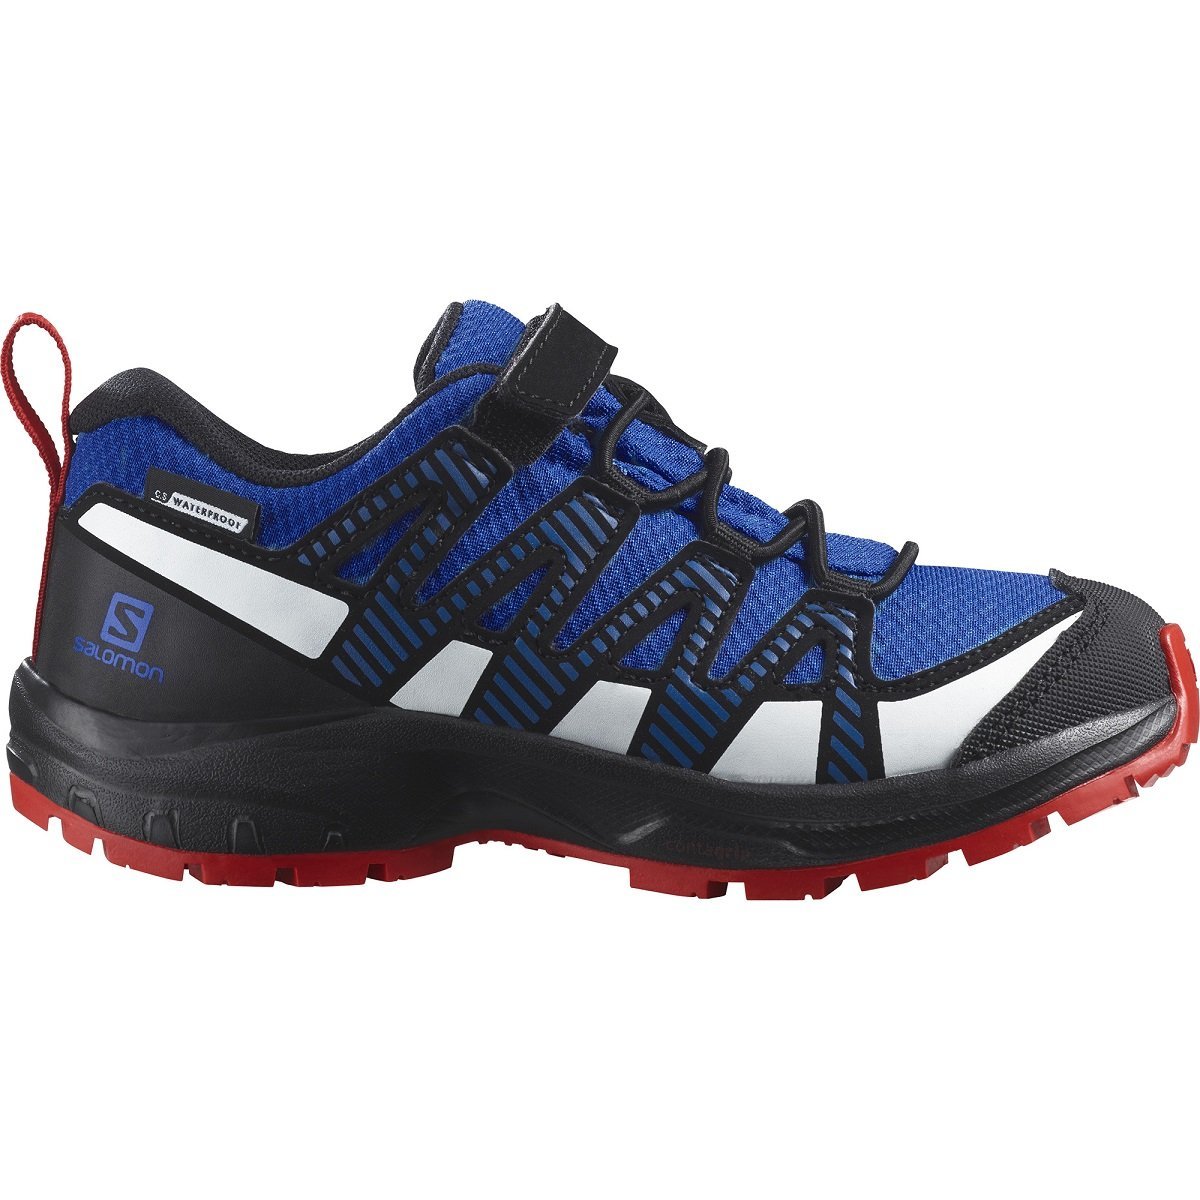 Topánky Salomon Xa Pro v8 Cswp J - blue/black/red